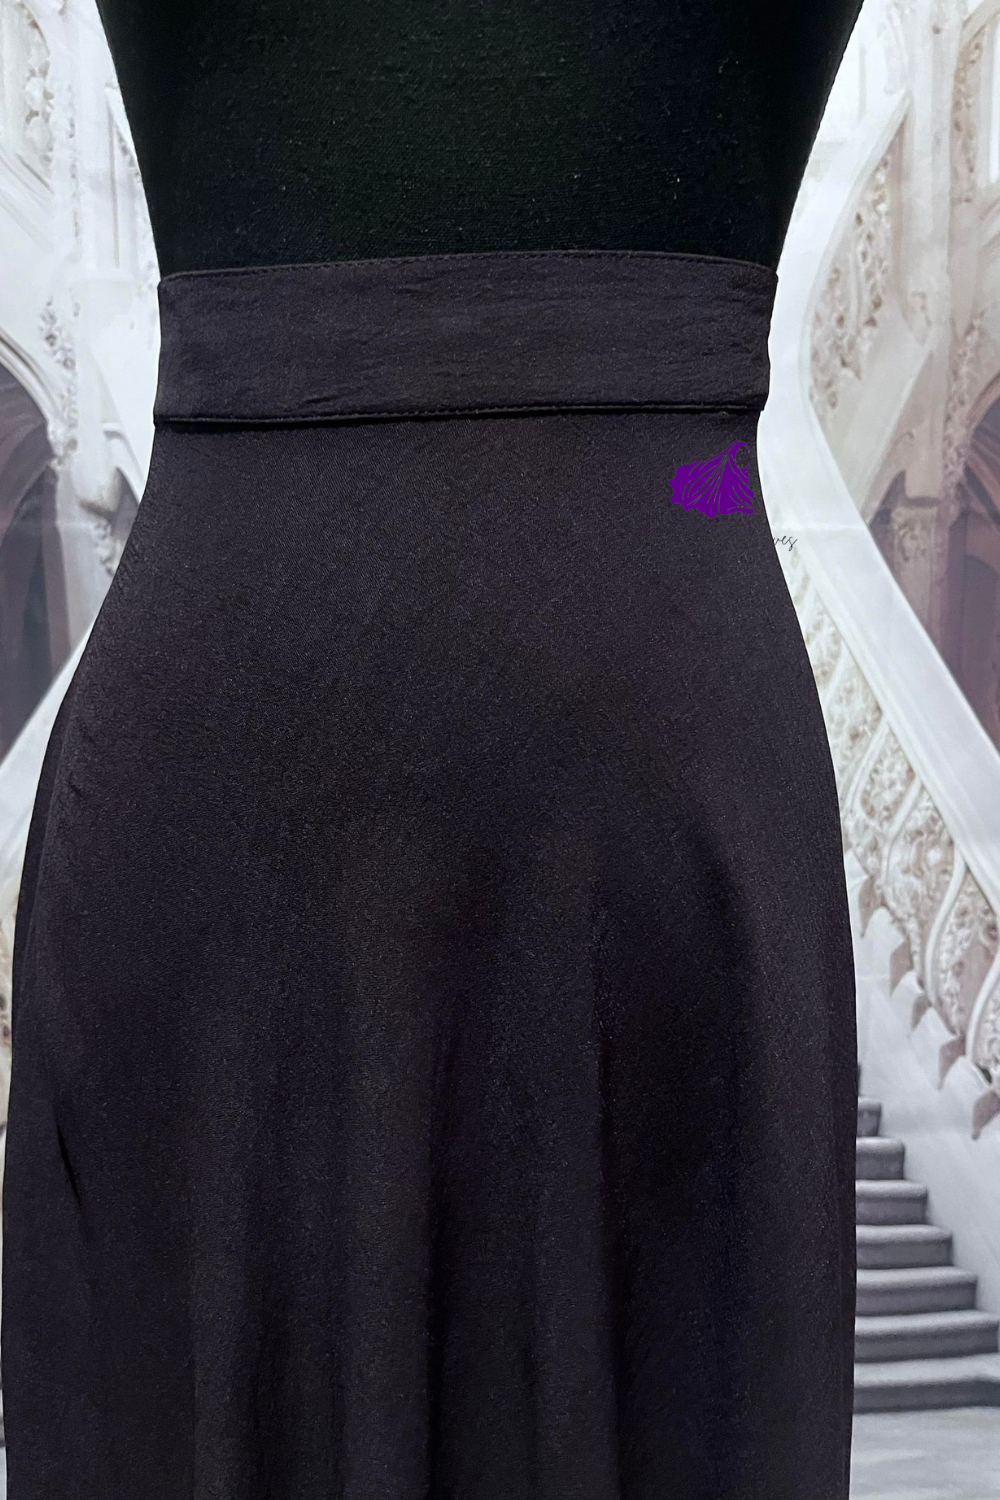 Skirts-Hiba High Waist Skirt, Full Circle Crepe Skirt with elastic Band & Pockets-Dark Brown (ships to South America)